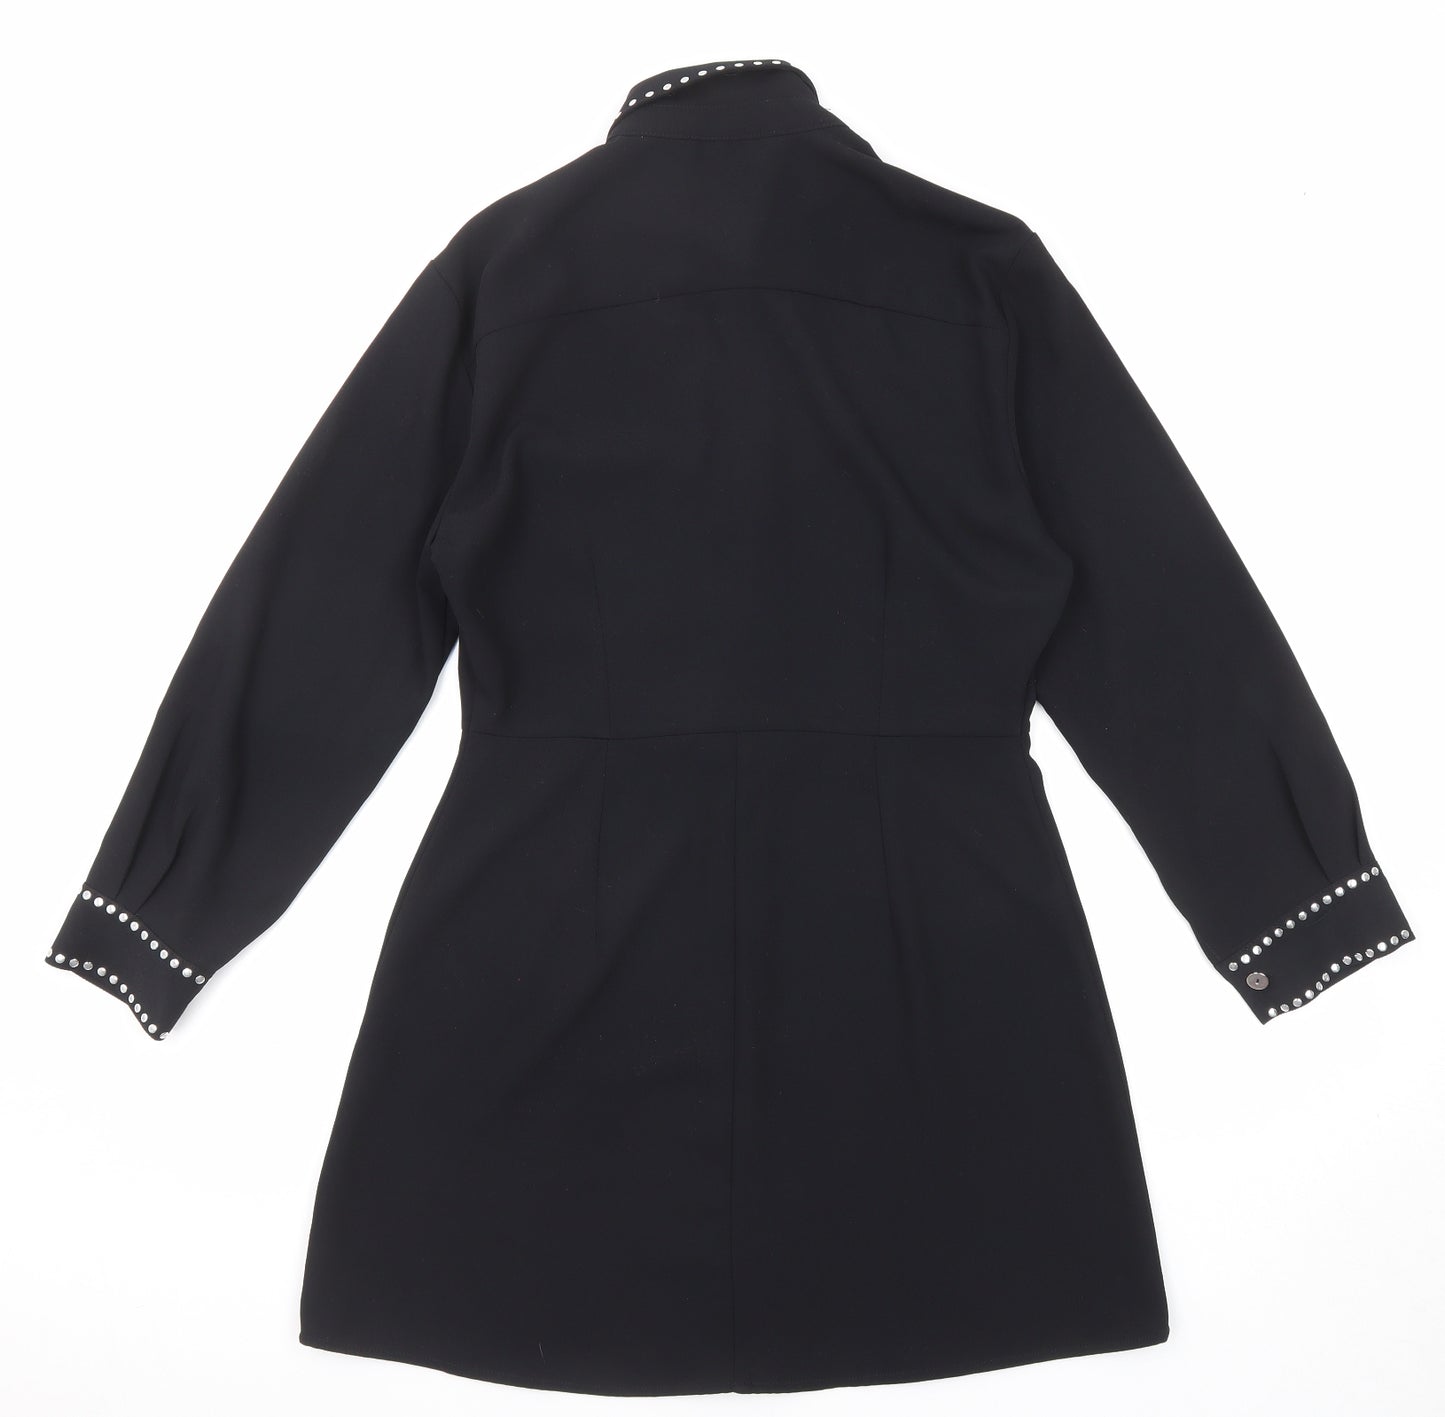 Zara Womens Black Polyester Shirt Dress Size M Collared Button